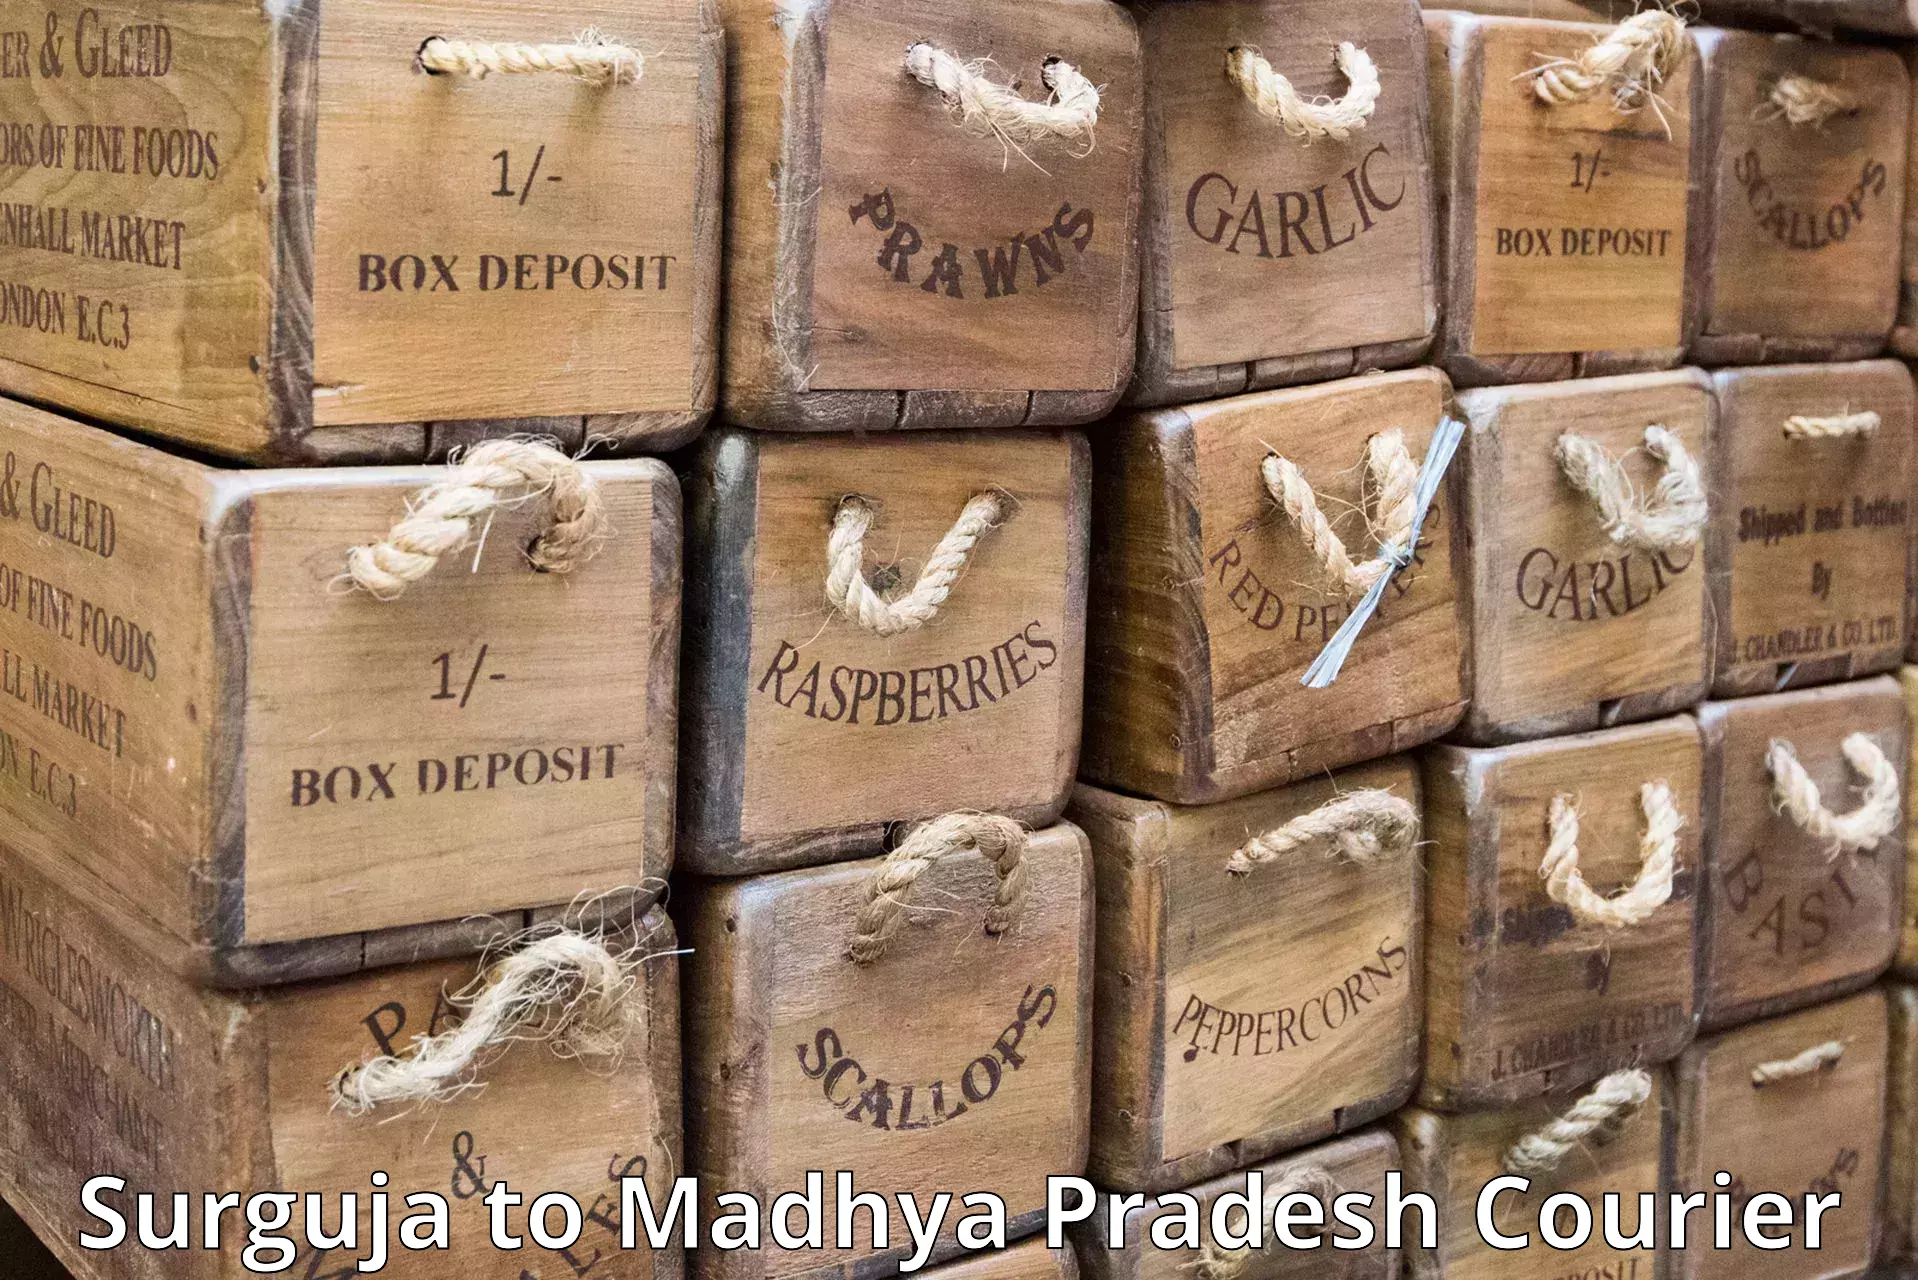 Fast delivery service Surguja to Madhya Pradesh